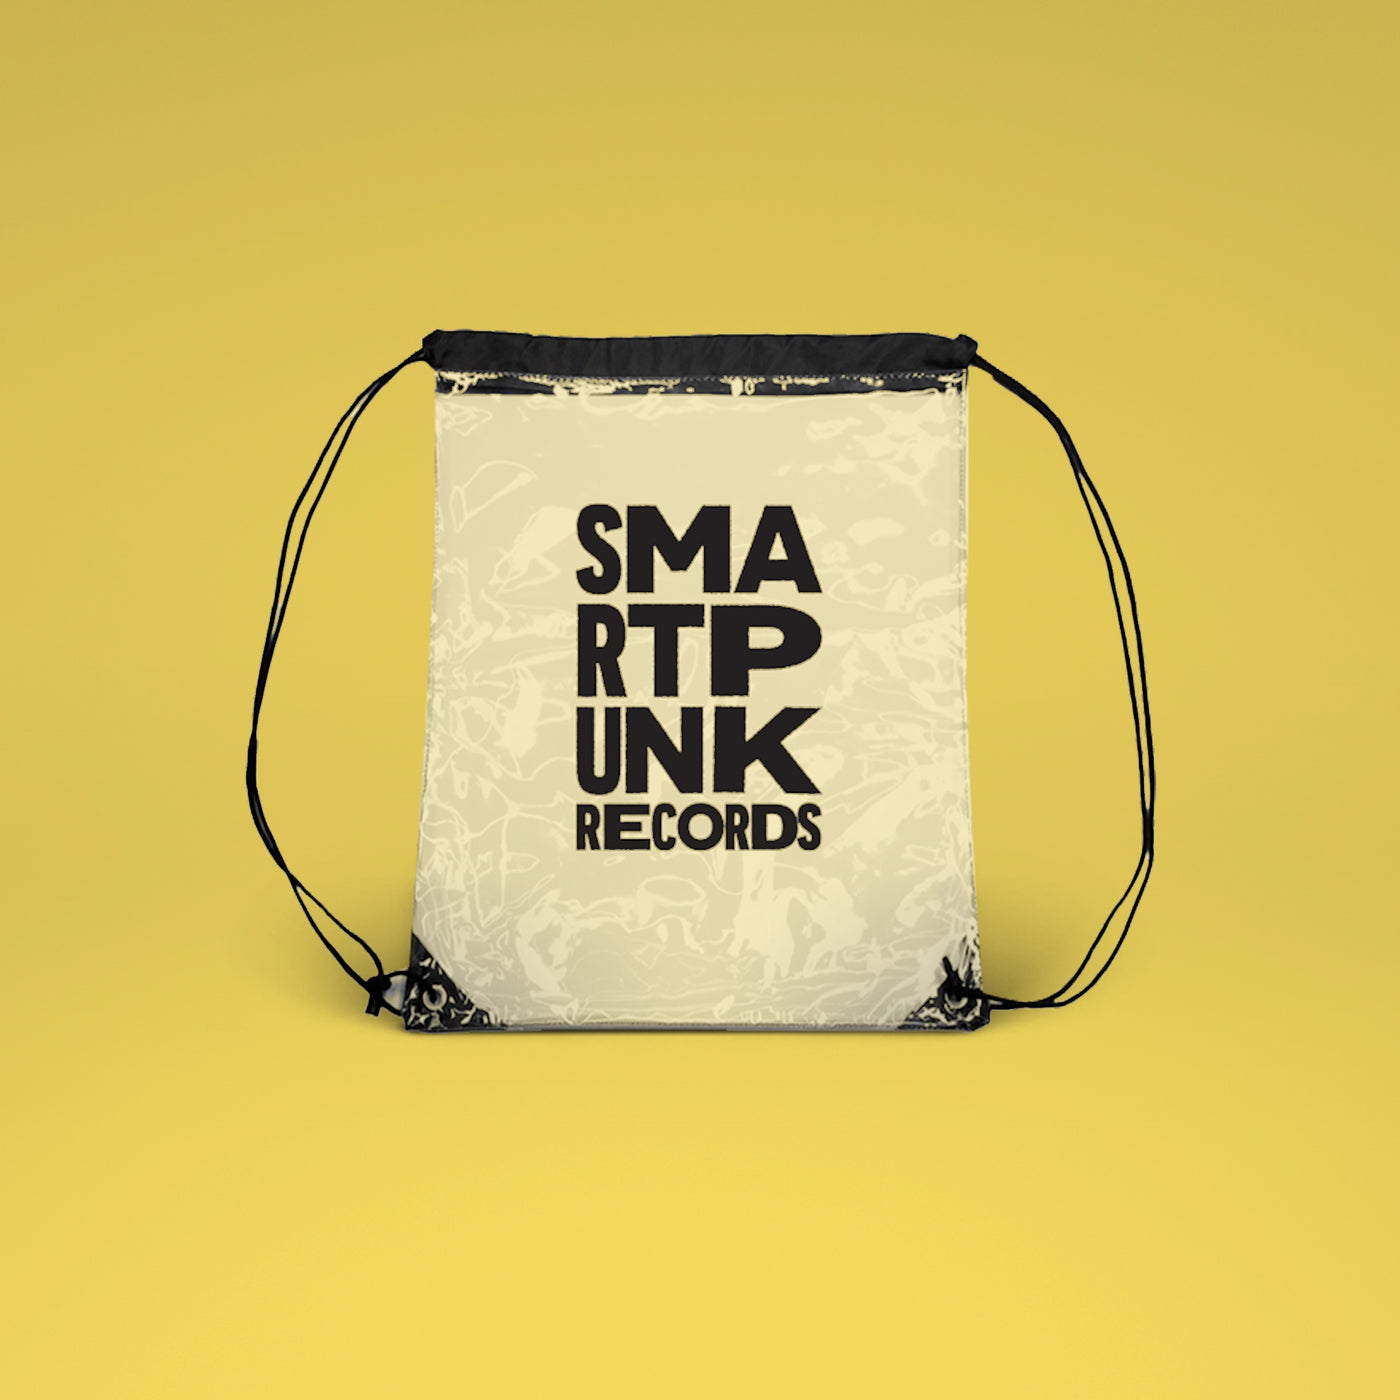 Smartpunk Records - Festival Bag